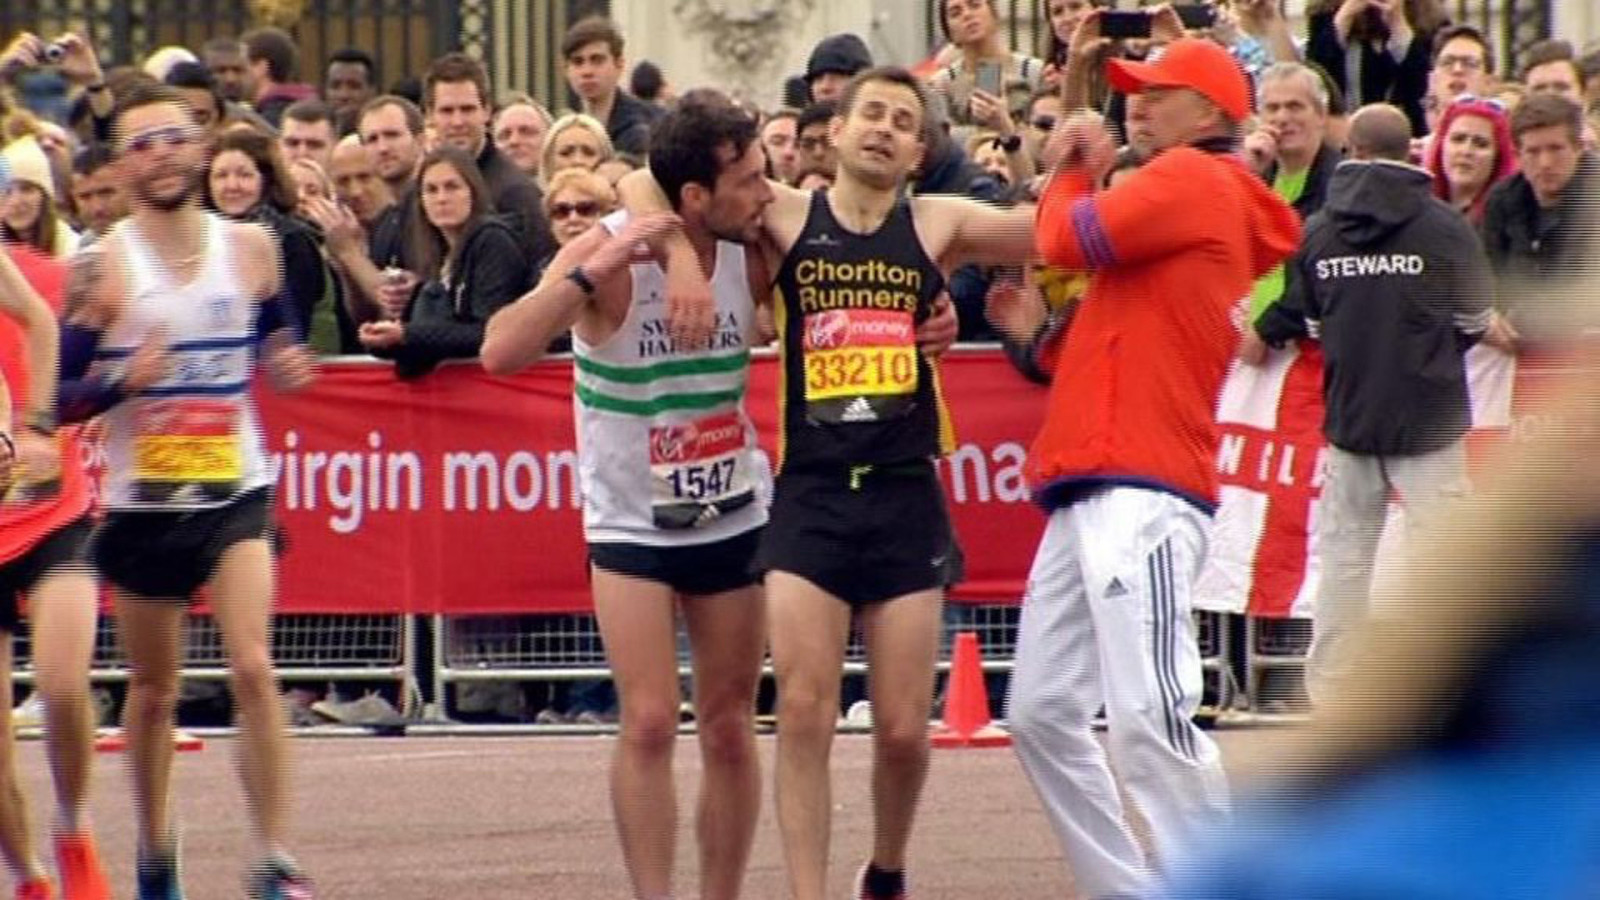 My finish результаты. David on London Marathon. David London Marathon. На марафоне донесли до финиша фото. Runner helping other Runner.